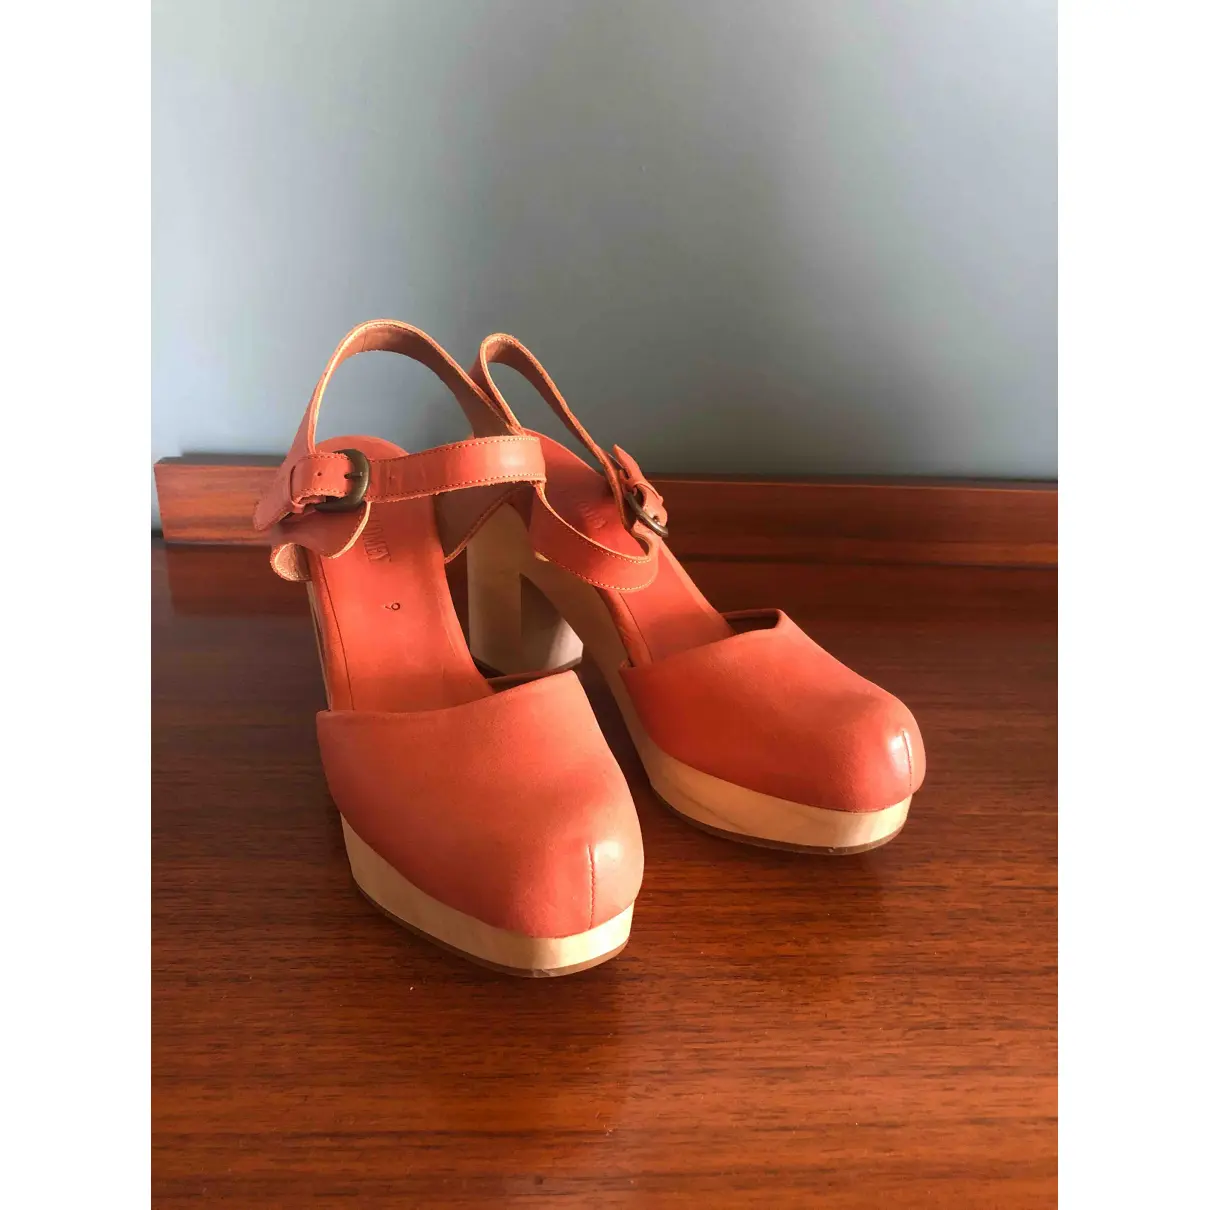 Buy Rachel Comey Leather sandal online